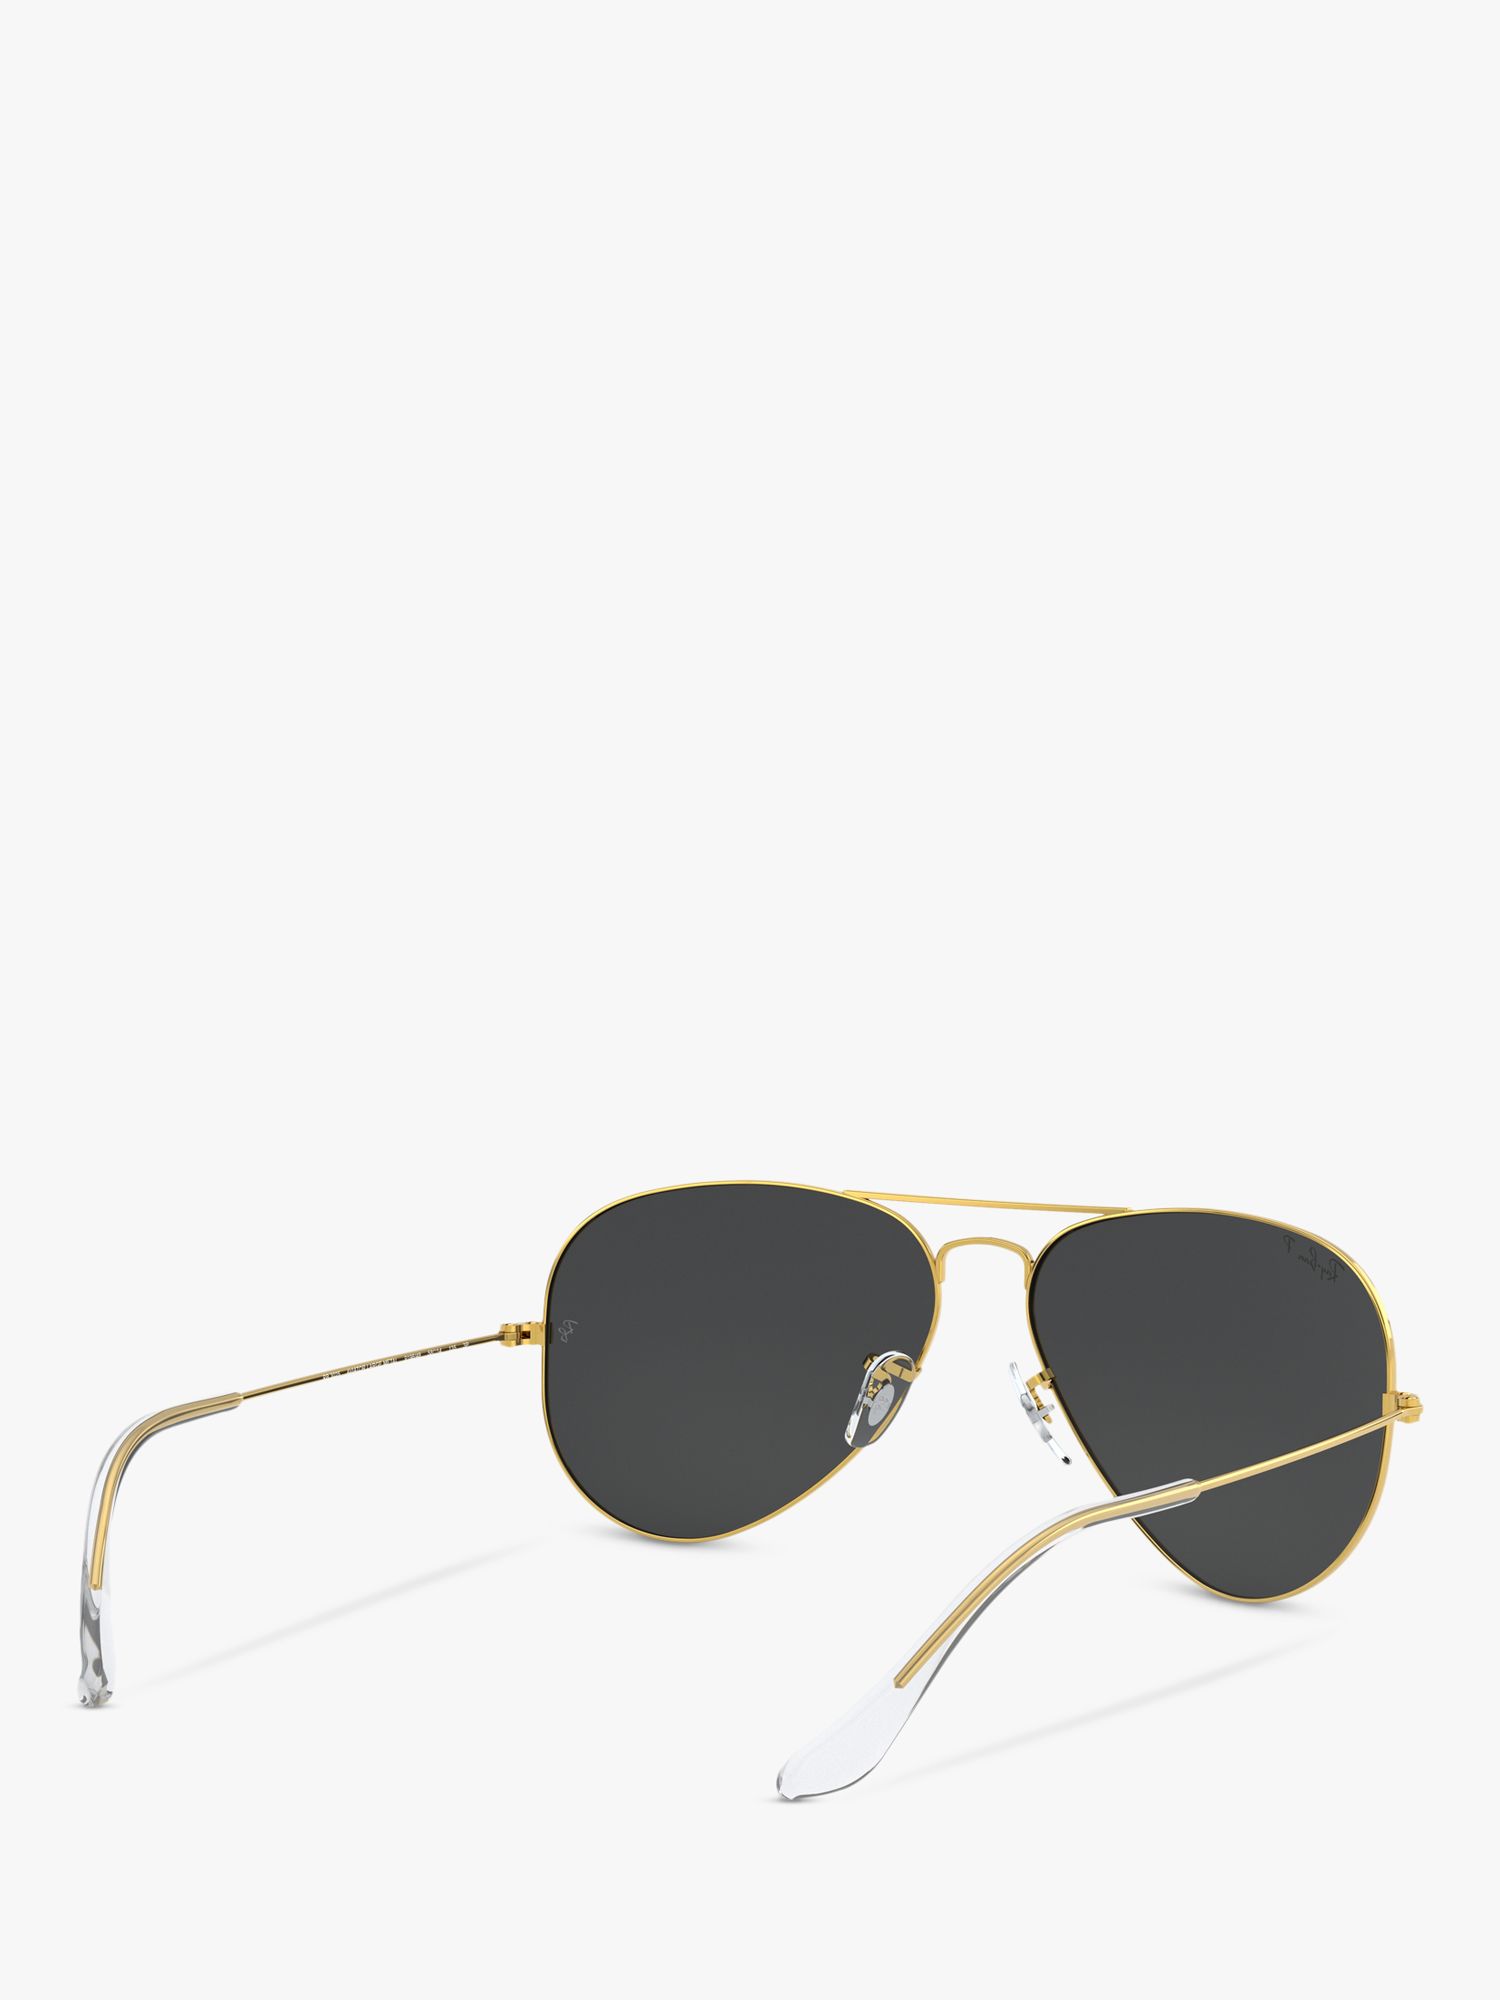 Ray-Ban RB3025 Unisex Polarised Aviator Sunglasses, Gold/Black